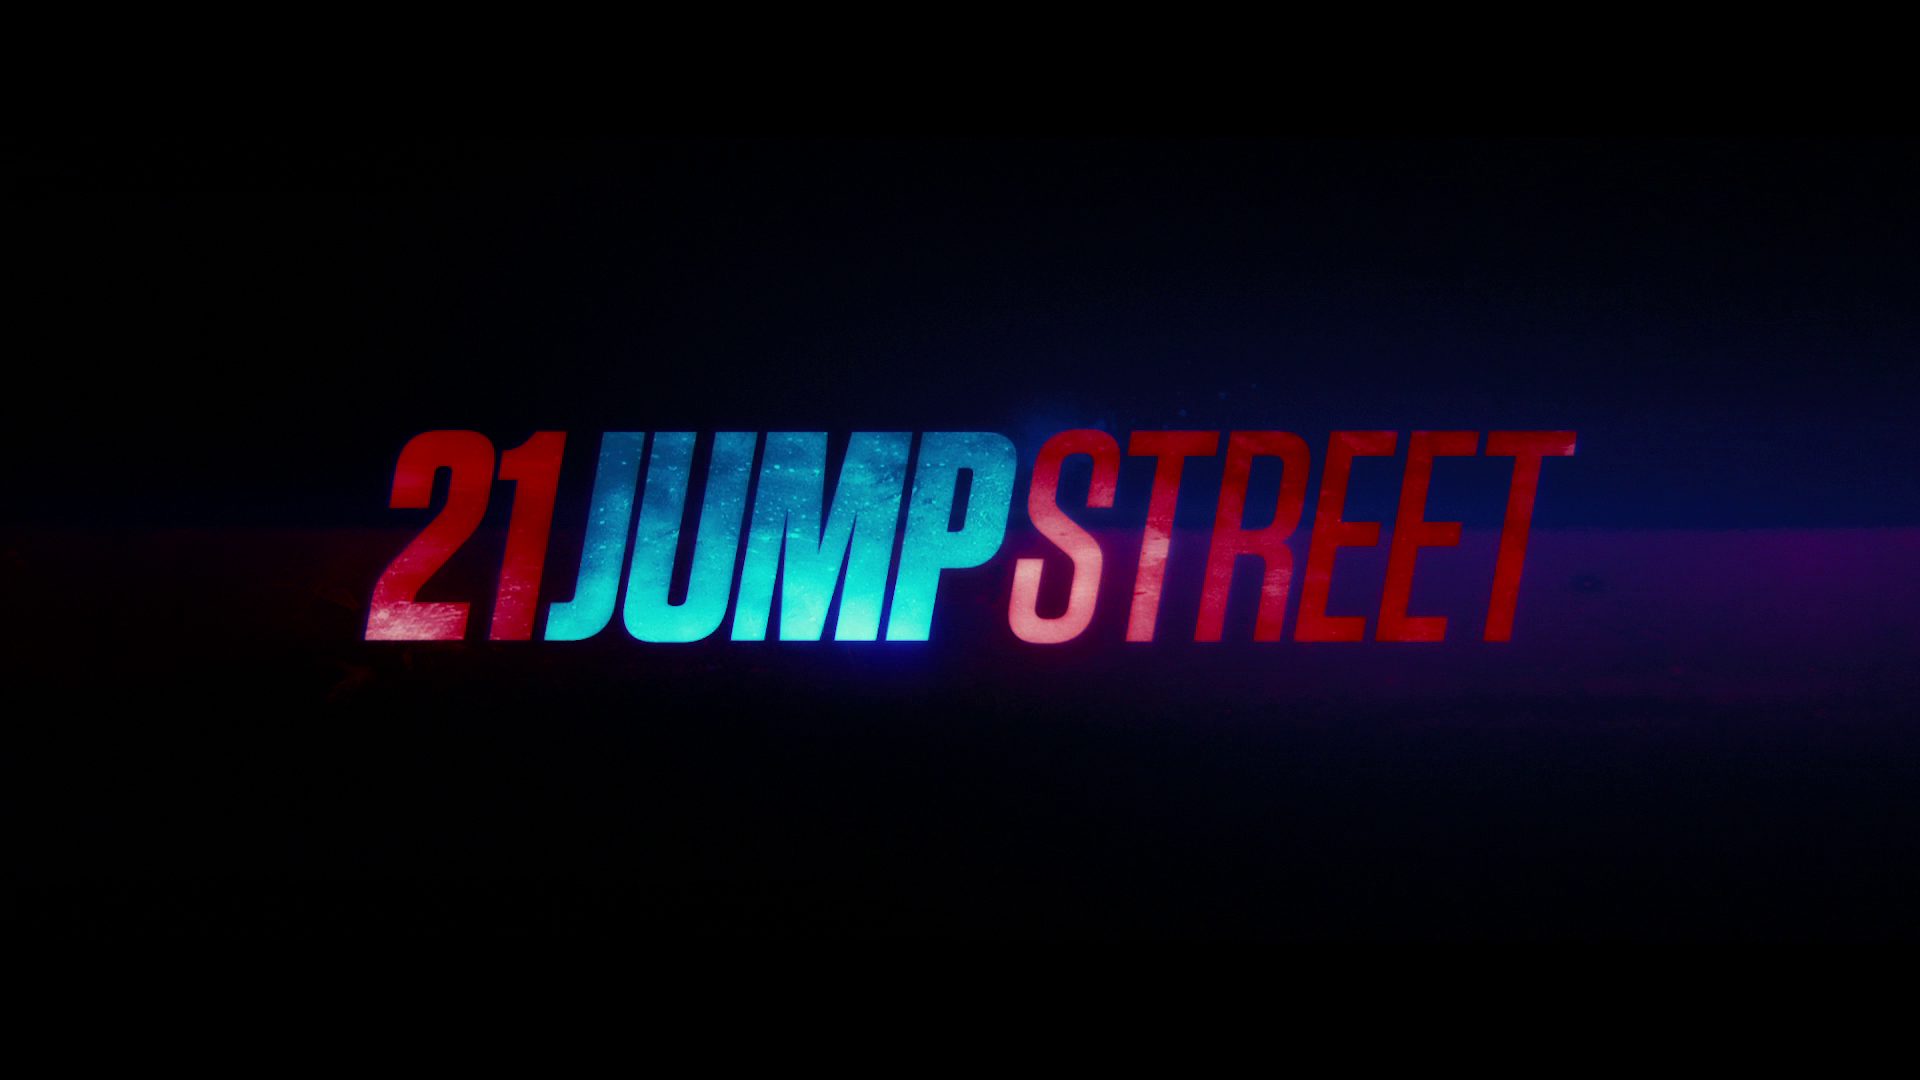 21 Jump Street 2012 FullHD 1080 Quality - Video Dailymotion